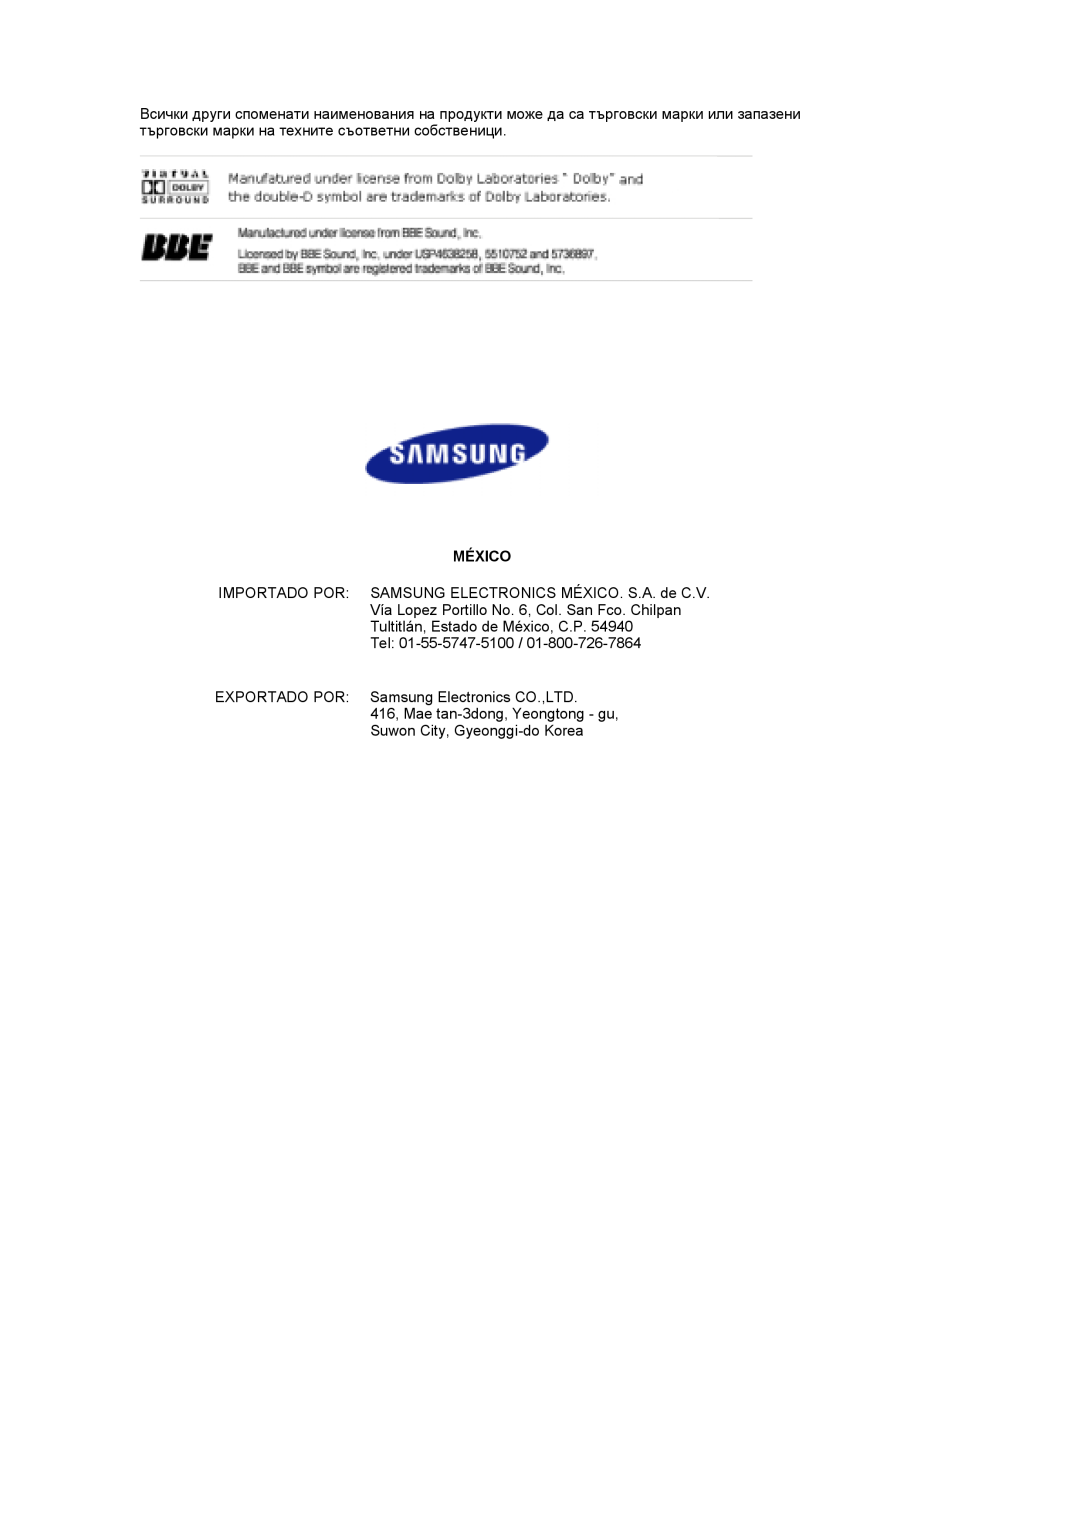 Samsung LS19DOWSSZ/EDC, LS19DOCSS/EDC manual México, IMPORTADO POR SAMSUNG ELECTRONICS MÉXICO. S.A. de C.V 